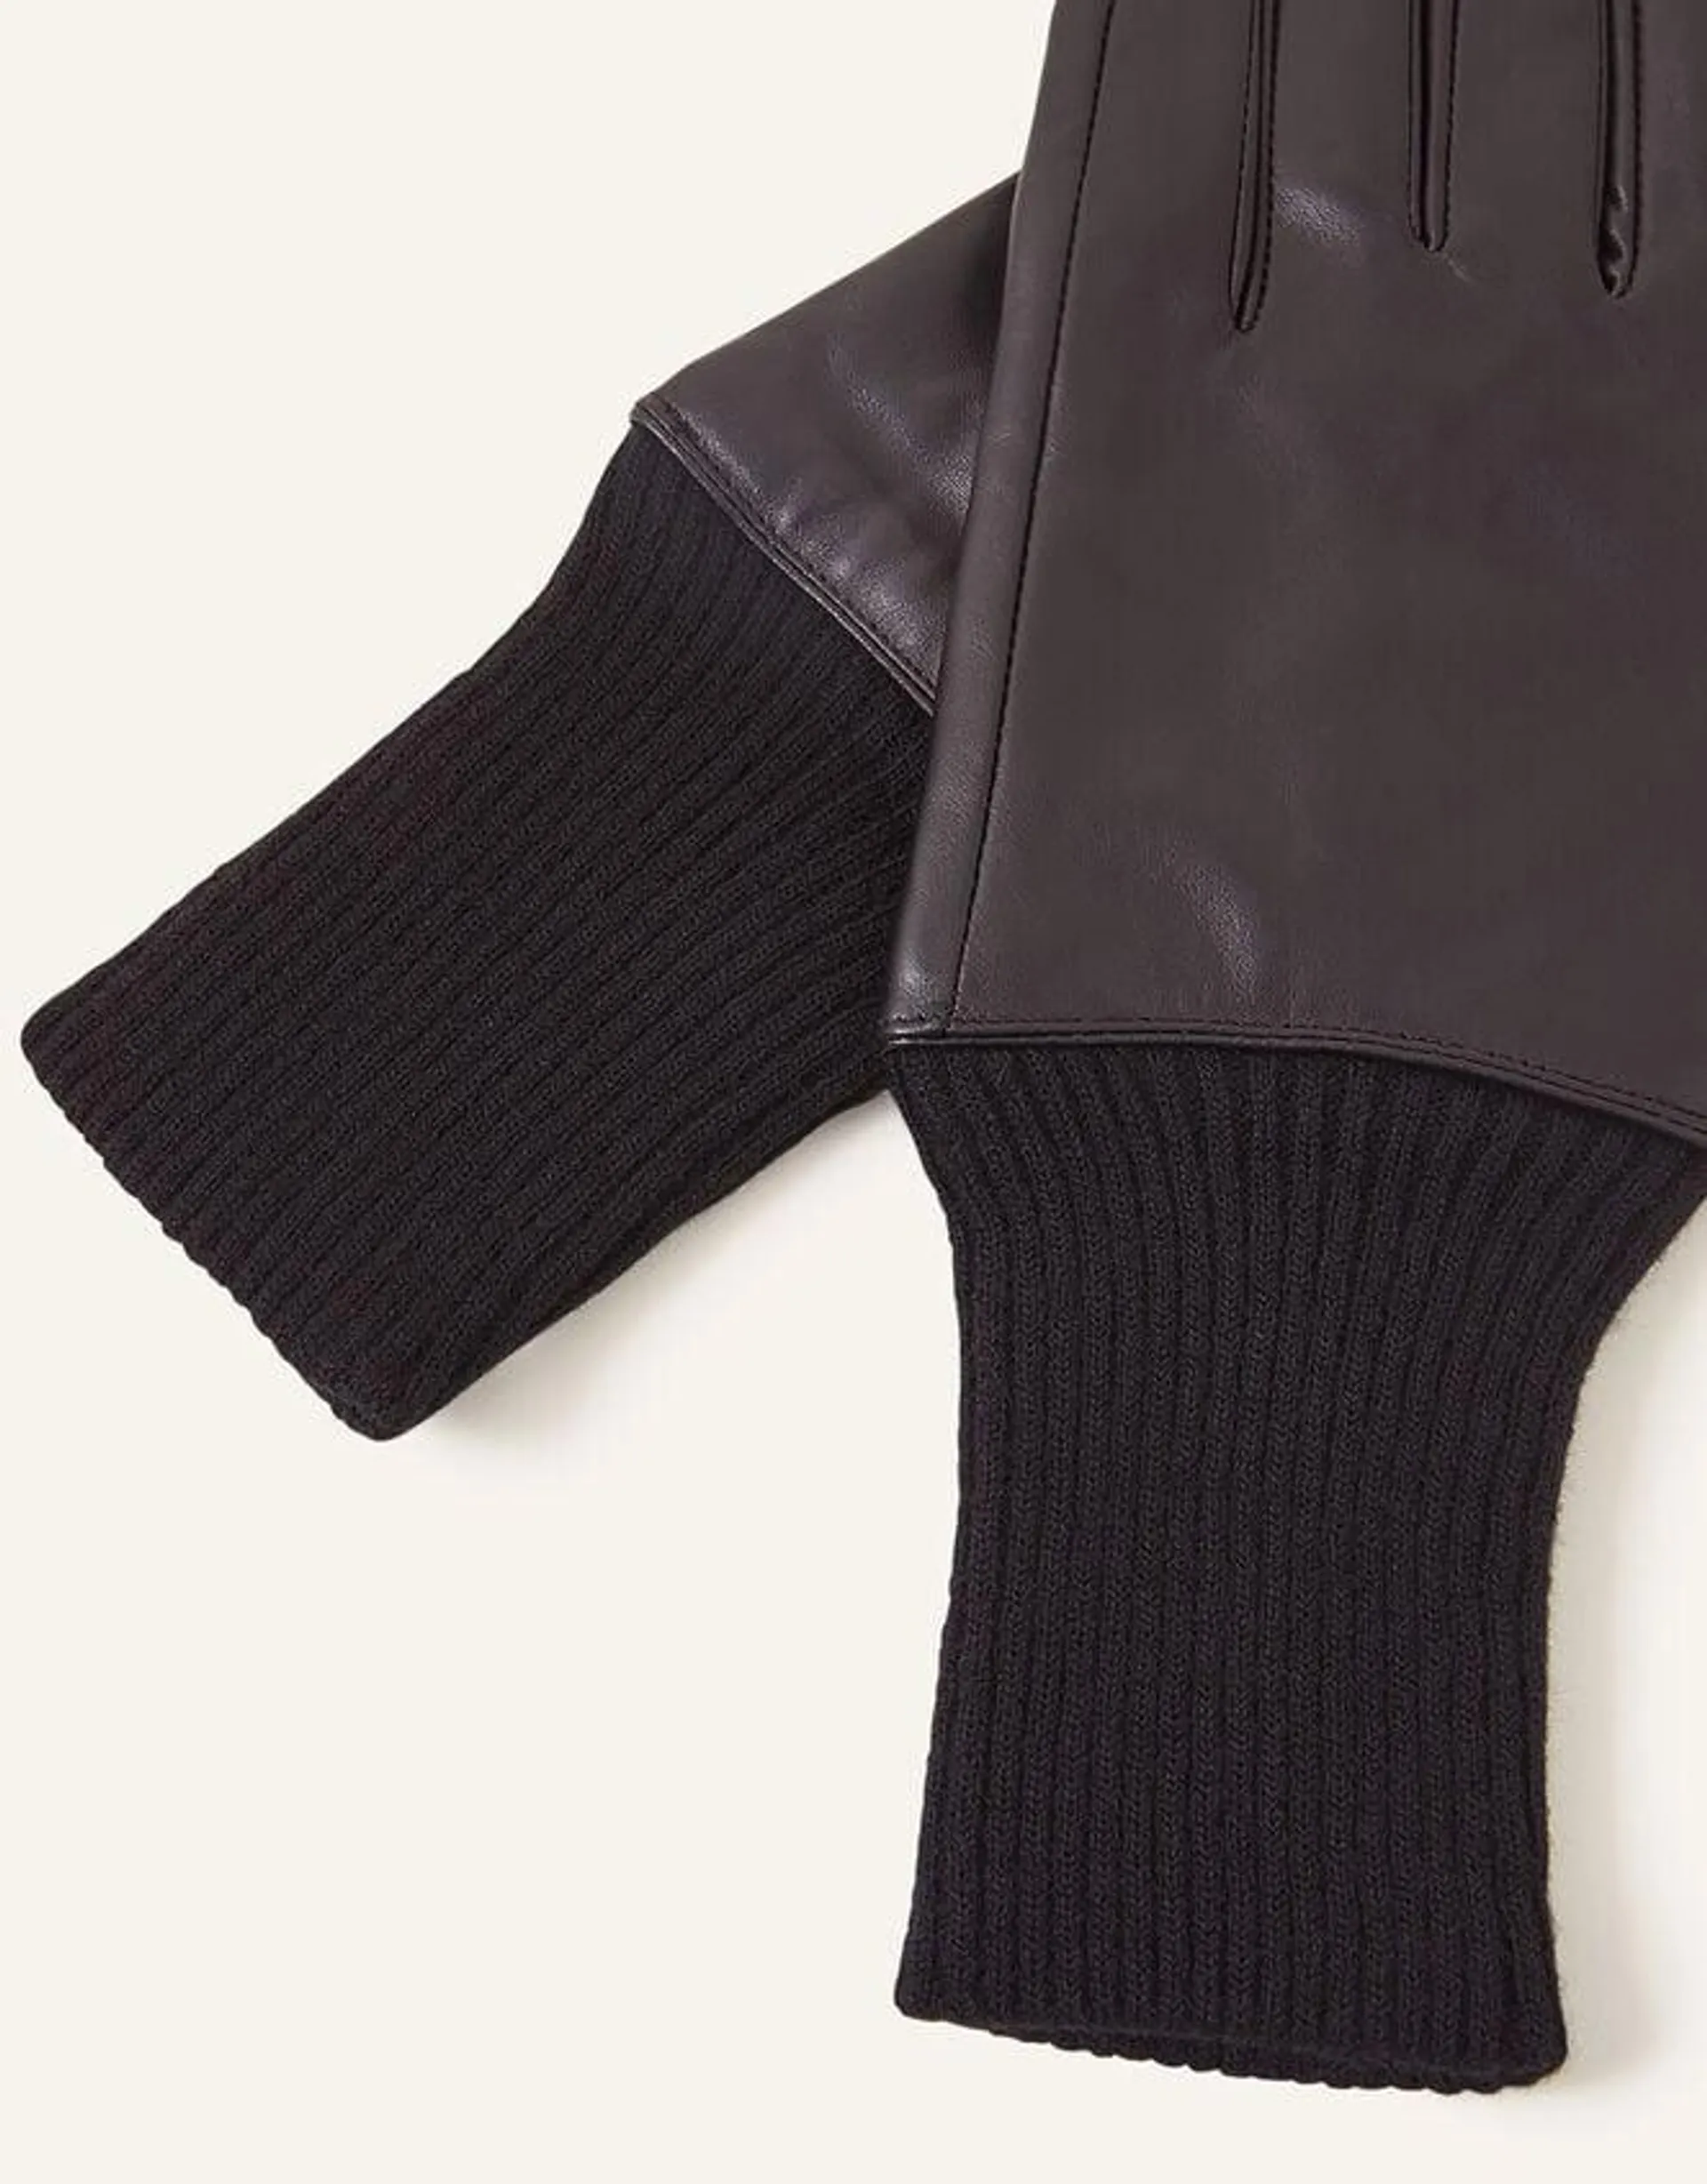 Leather Cuff Gloves Black